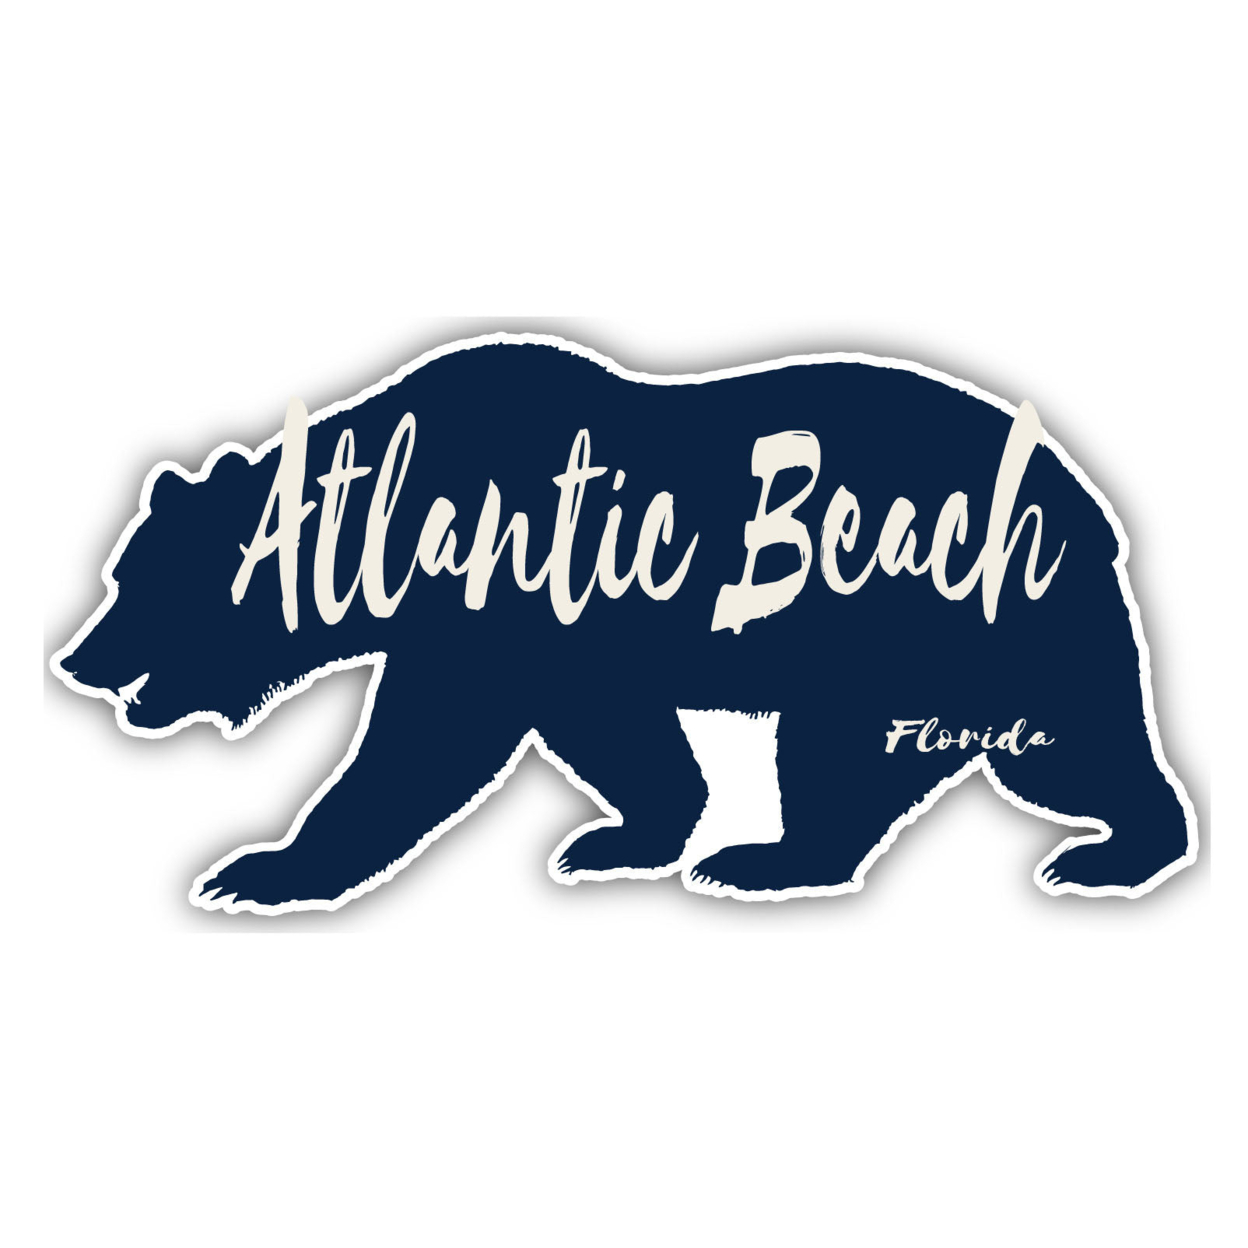 Atlantic Beach Florida Souvenir Decorative Stickers (Choose Theme And Size) - 4-Pack, 4-Inch, Bear